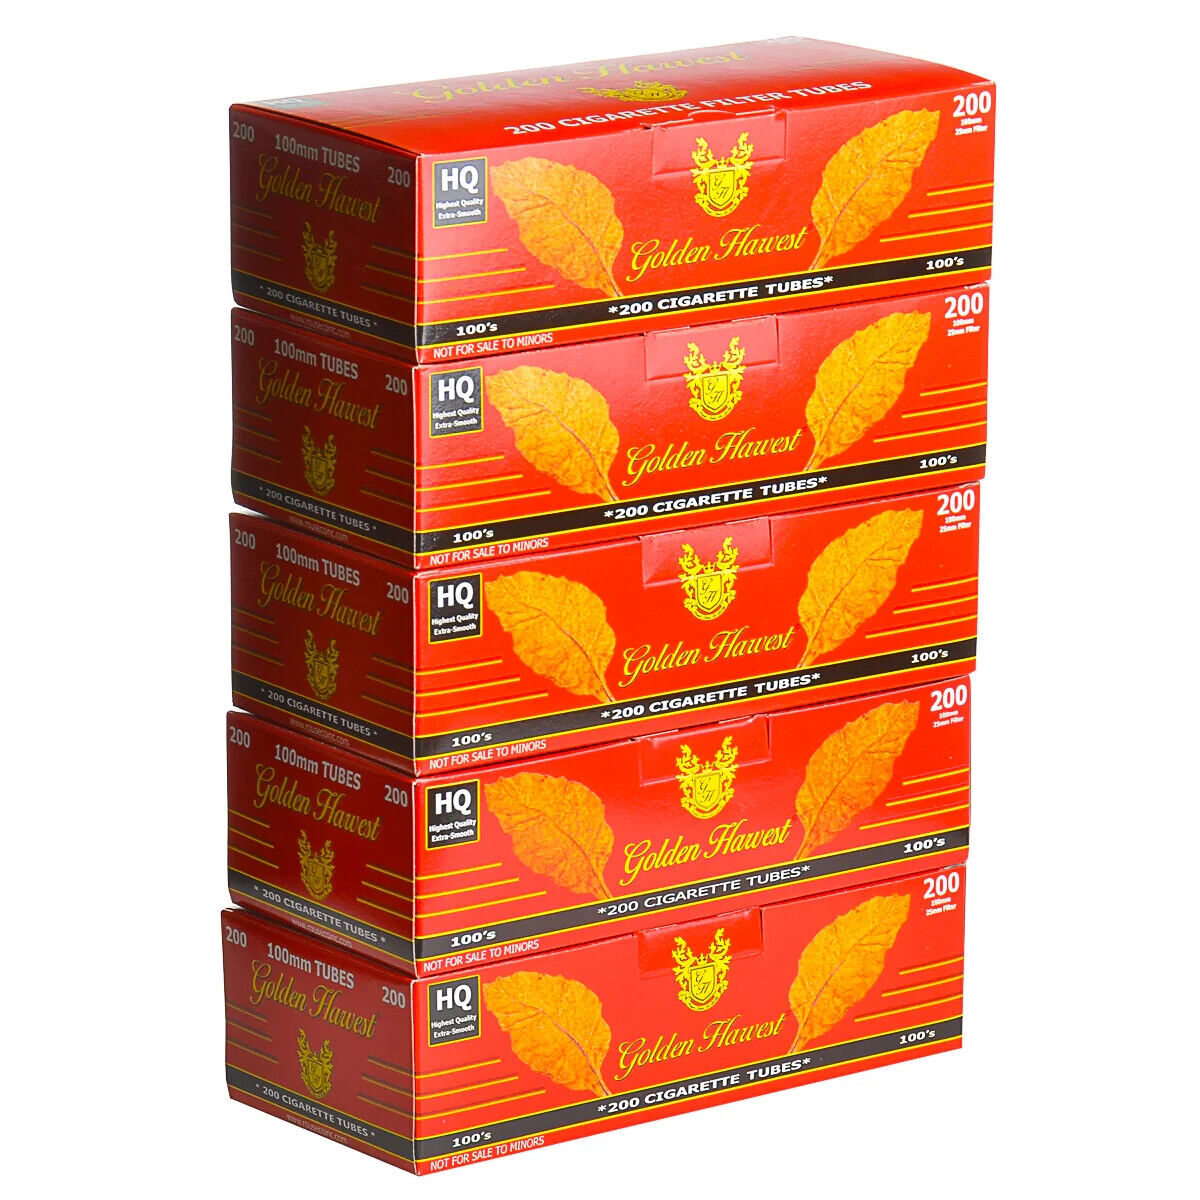 Golden Harvest RED Cigarette Filter Tubes - 100mm 200ct Per Box [50-Boxes]